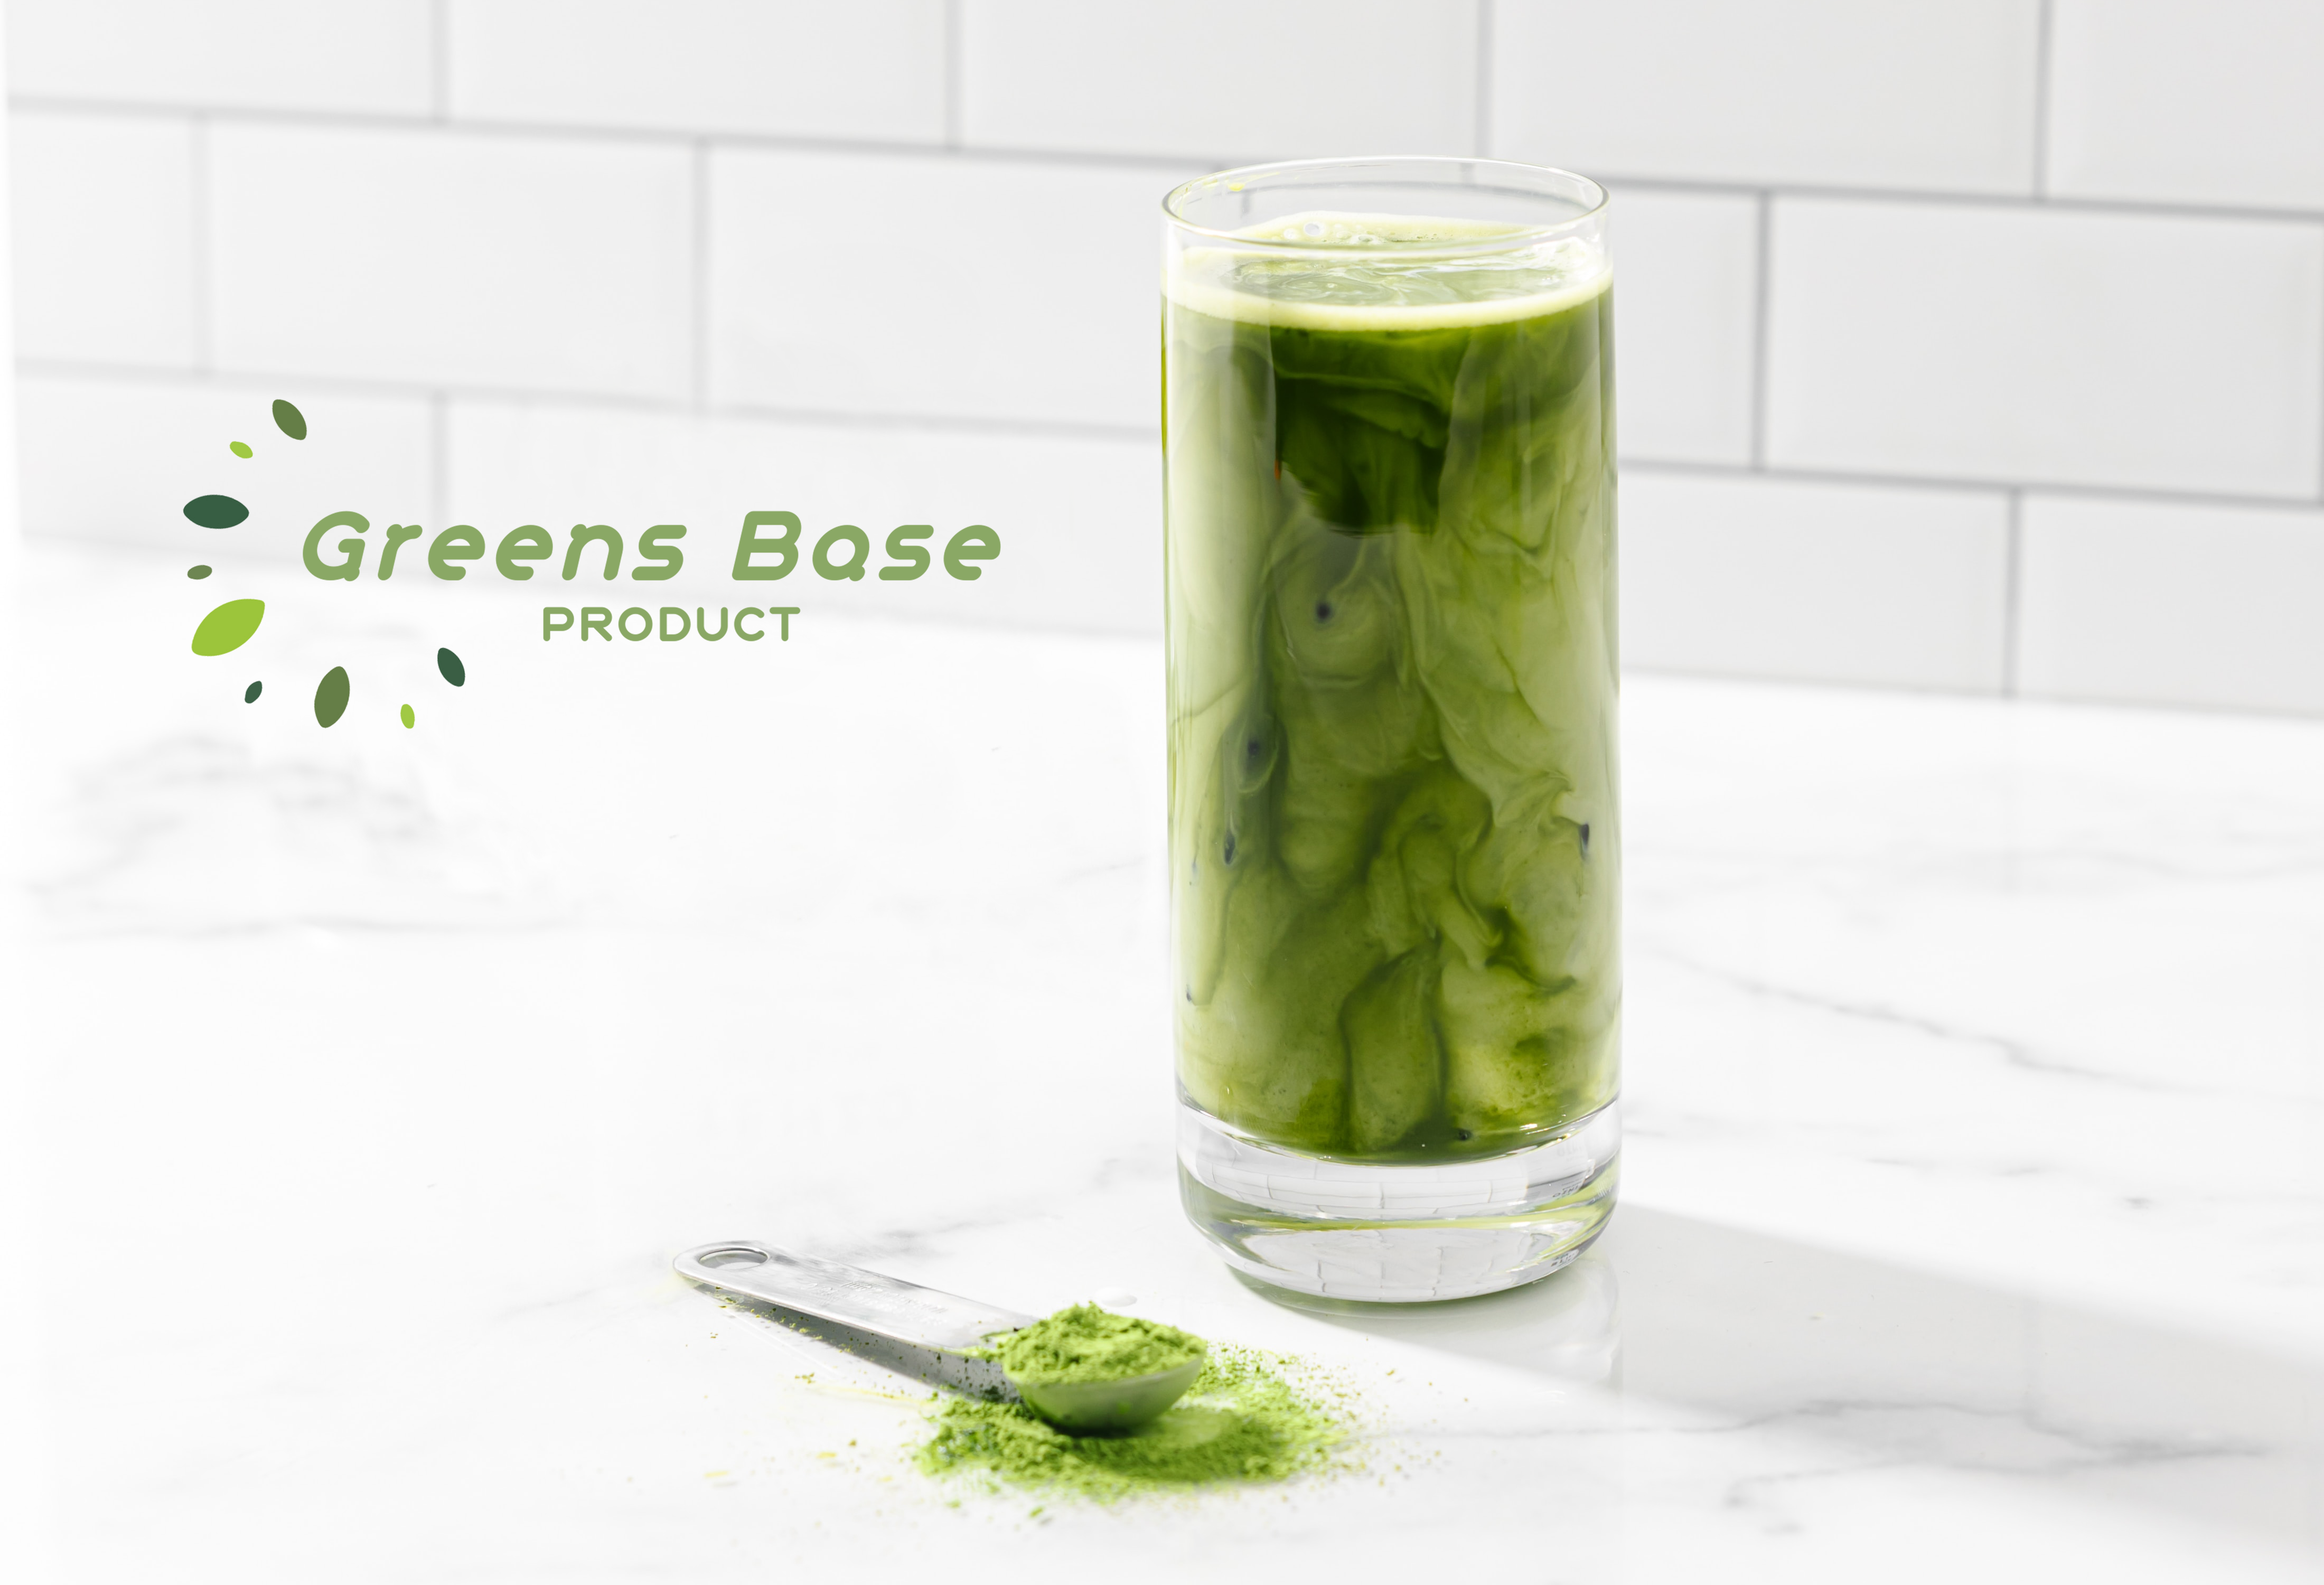 Greens Base Product - Ingredient Description